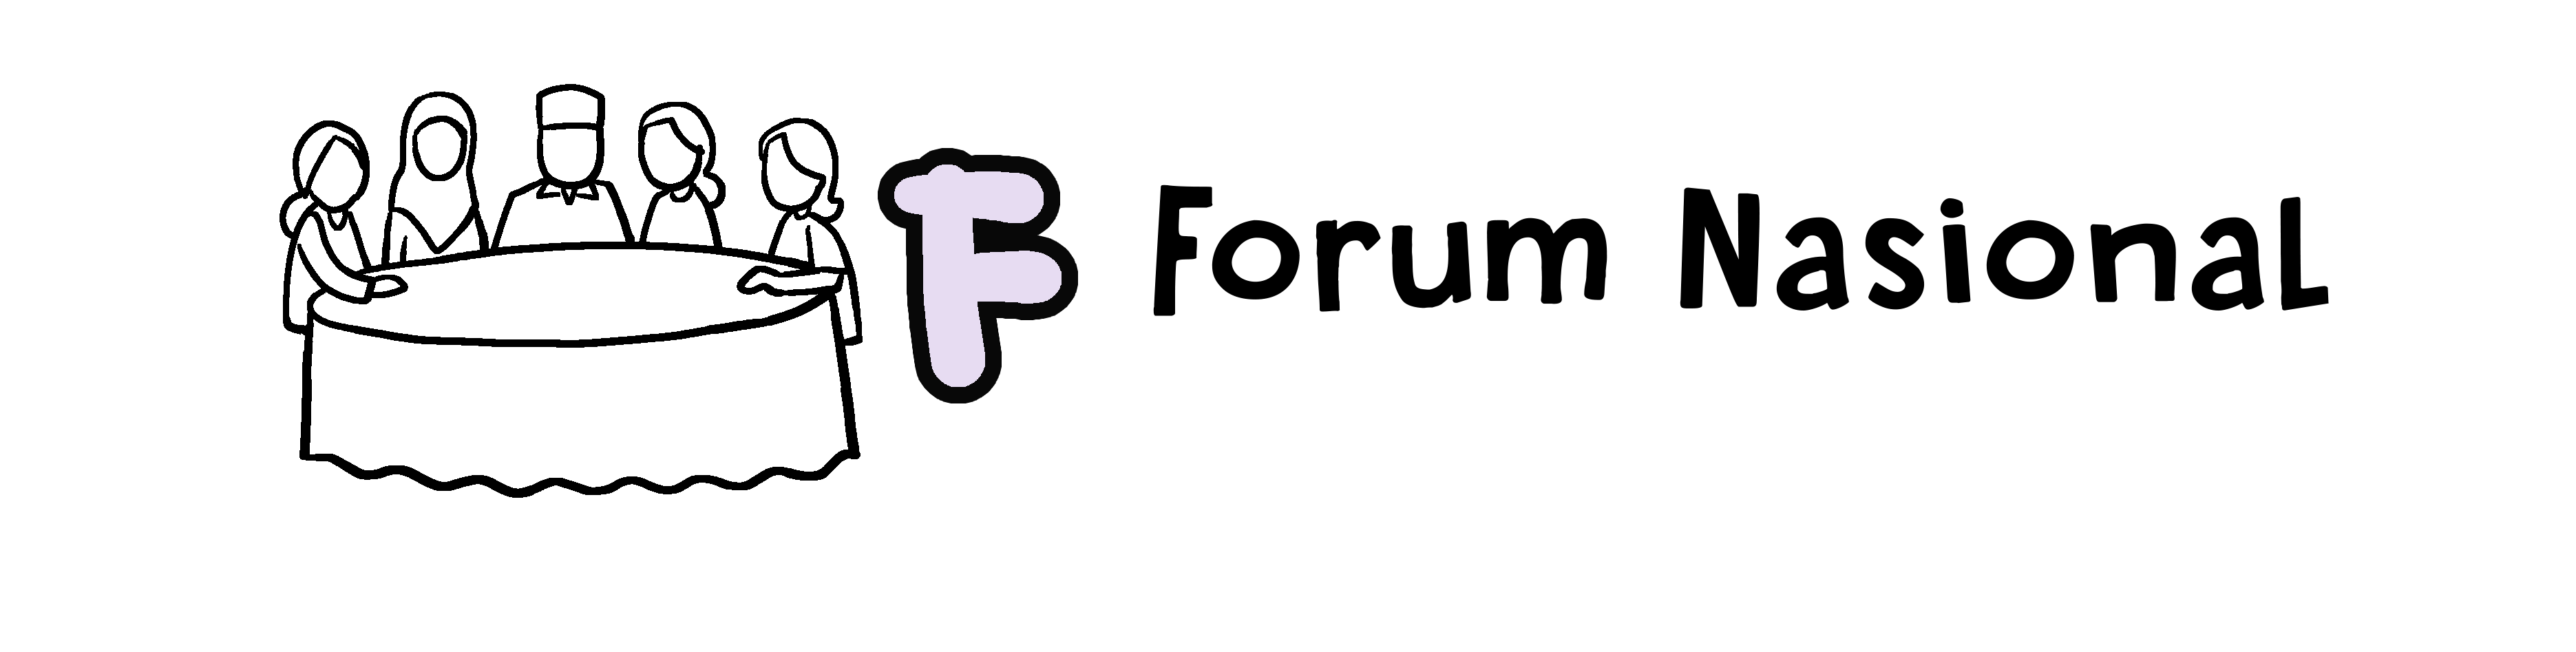 Forum Nasional